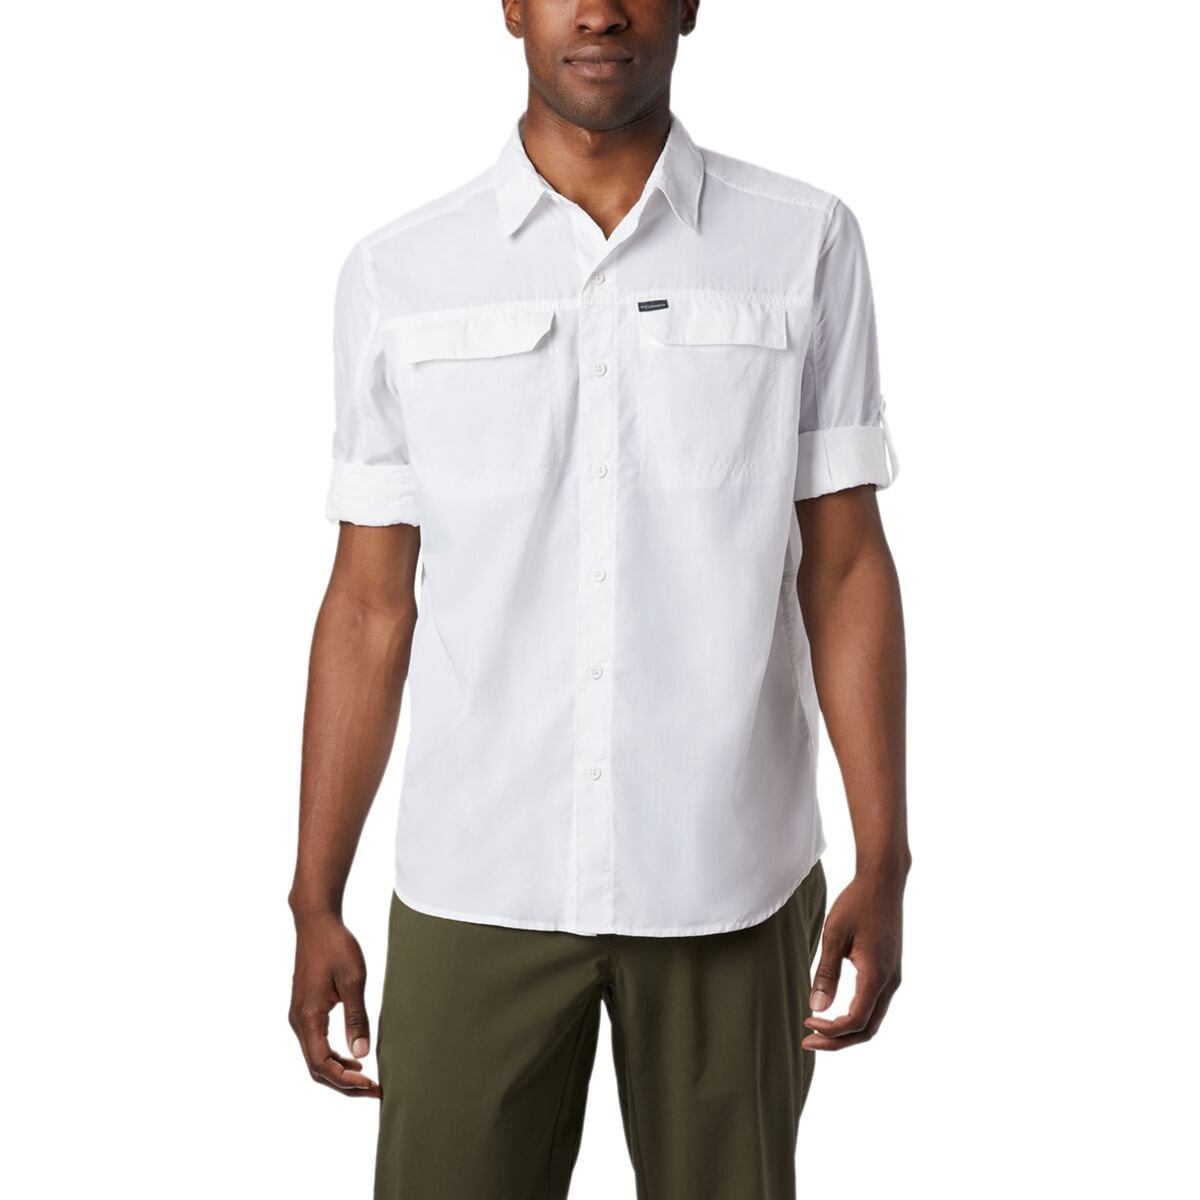 Columbia Silver Ridge 2.0 Long-Sleeve Shirt - Men's - Clothing